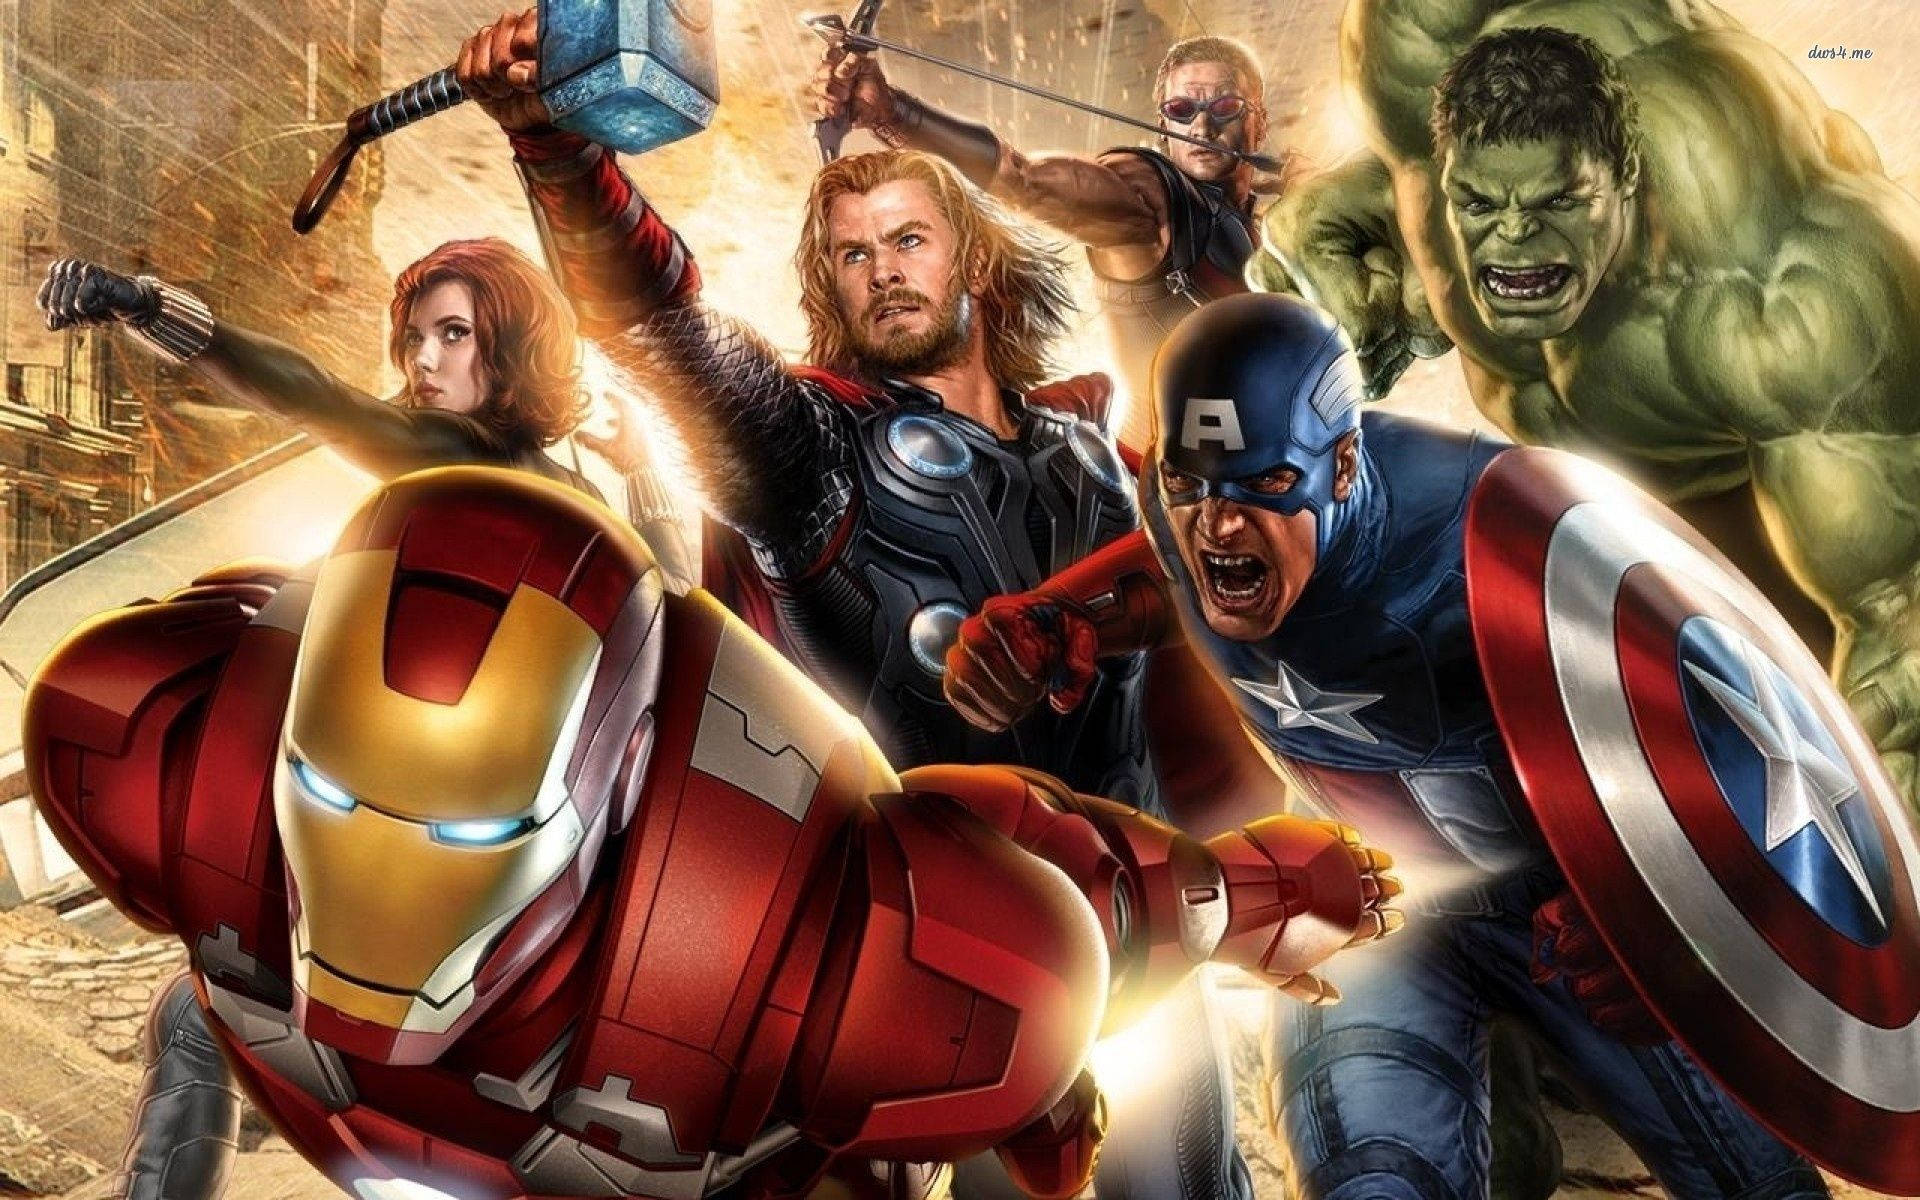 Avengers superheroes ready to fight, Hulk, Captain America, Thor, Black Widow and Iron Man.